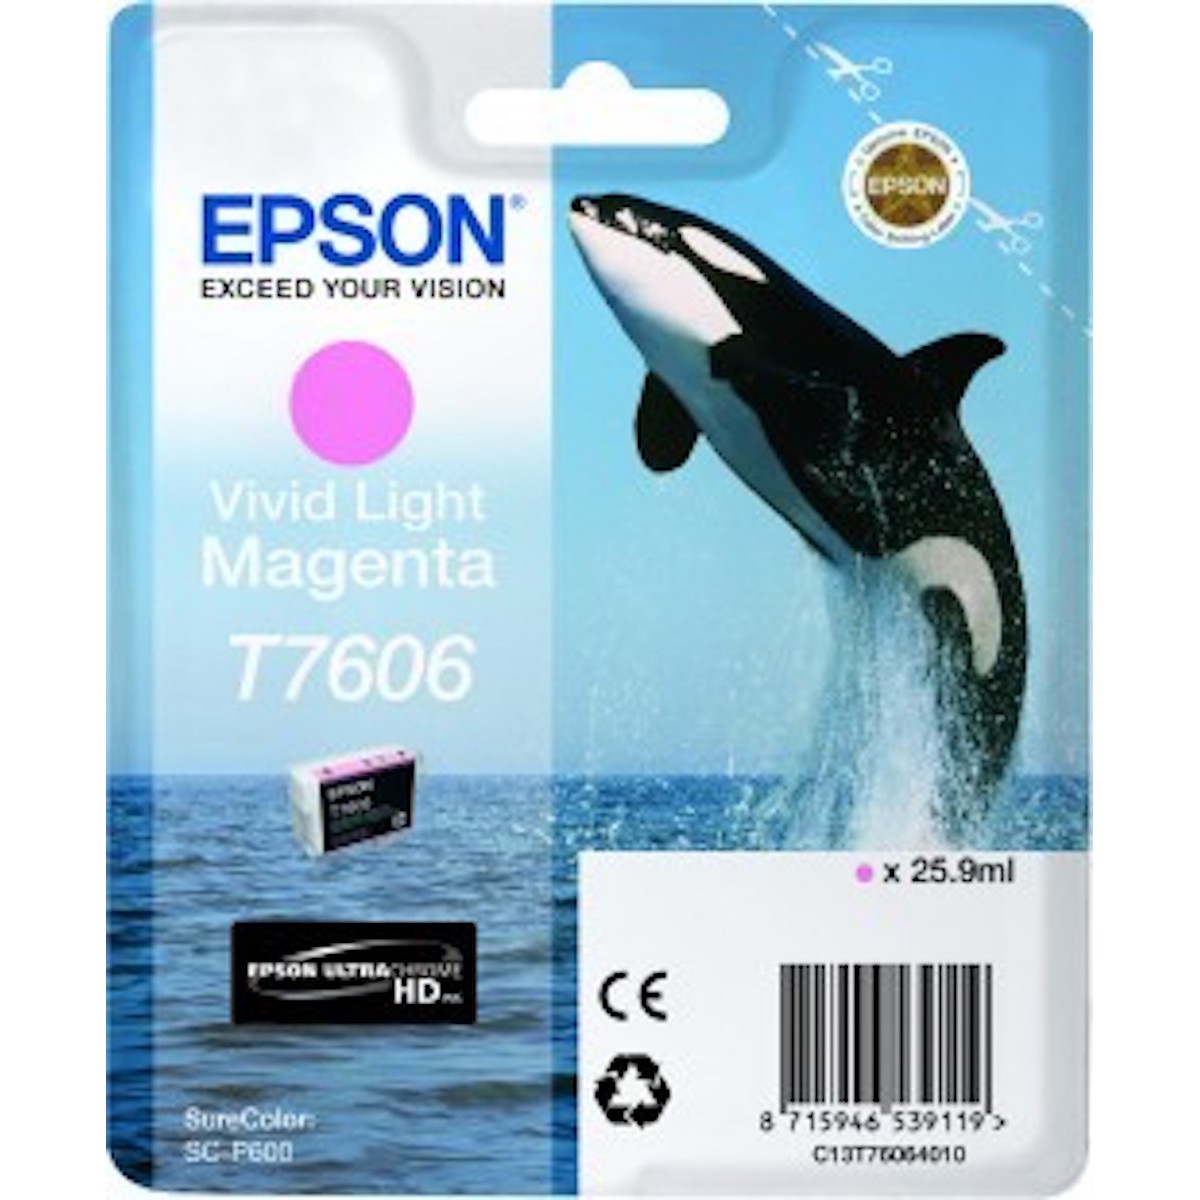 Epson T7606 vivid light magenta Tinte